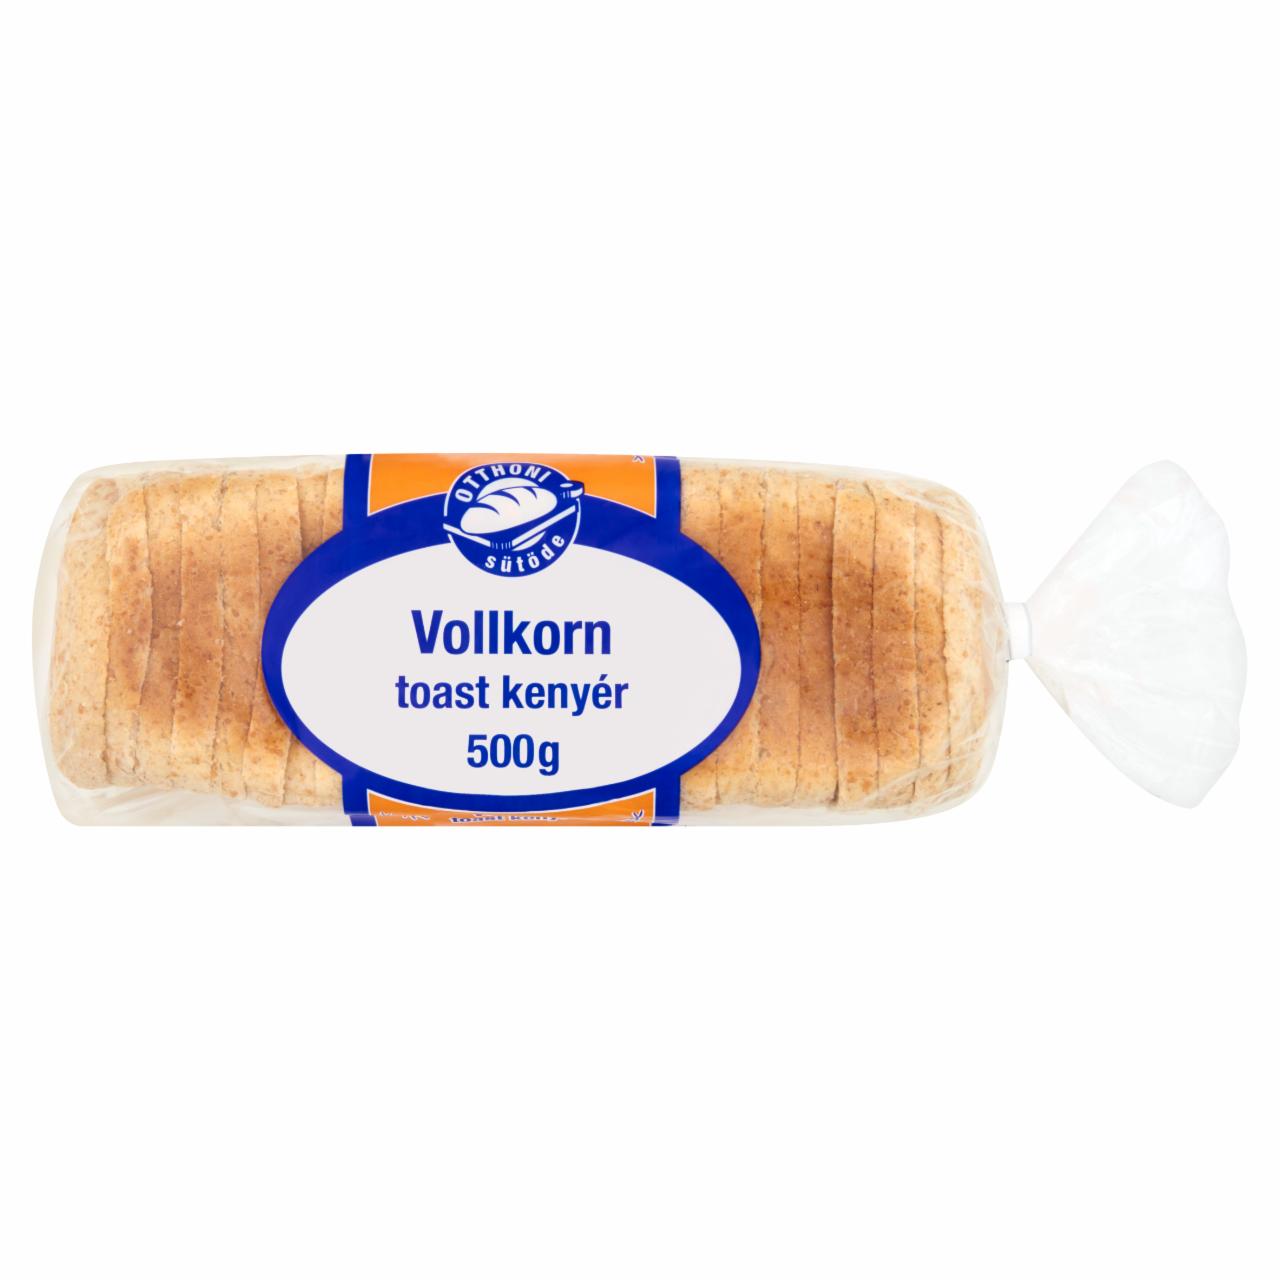 Képek - Otthoni Sütöde Vollkorn toast kenyér 500 g